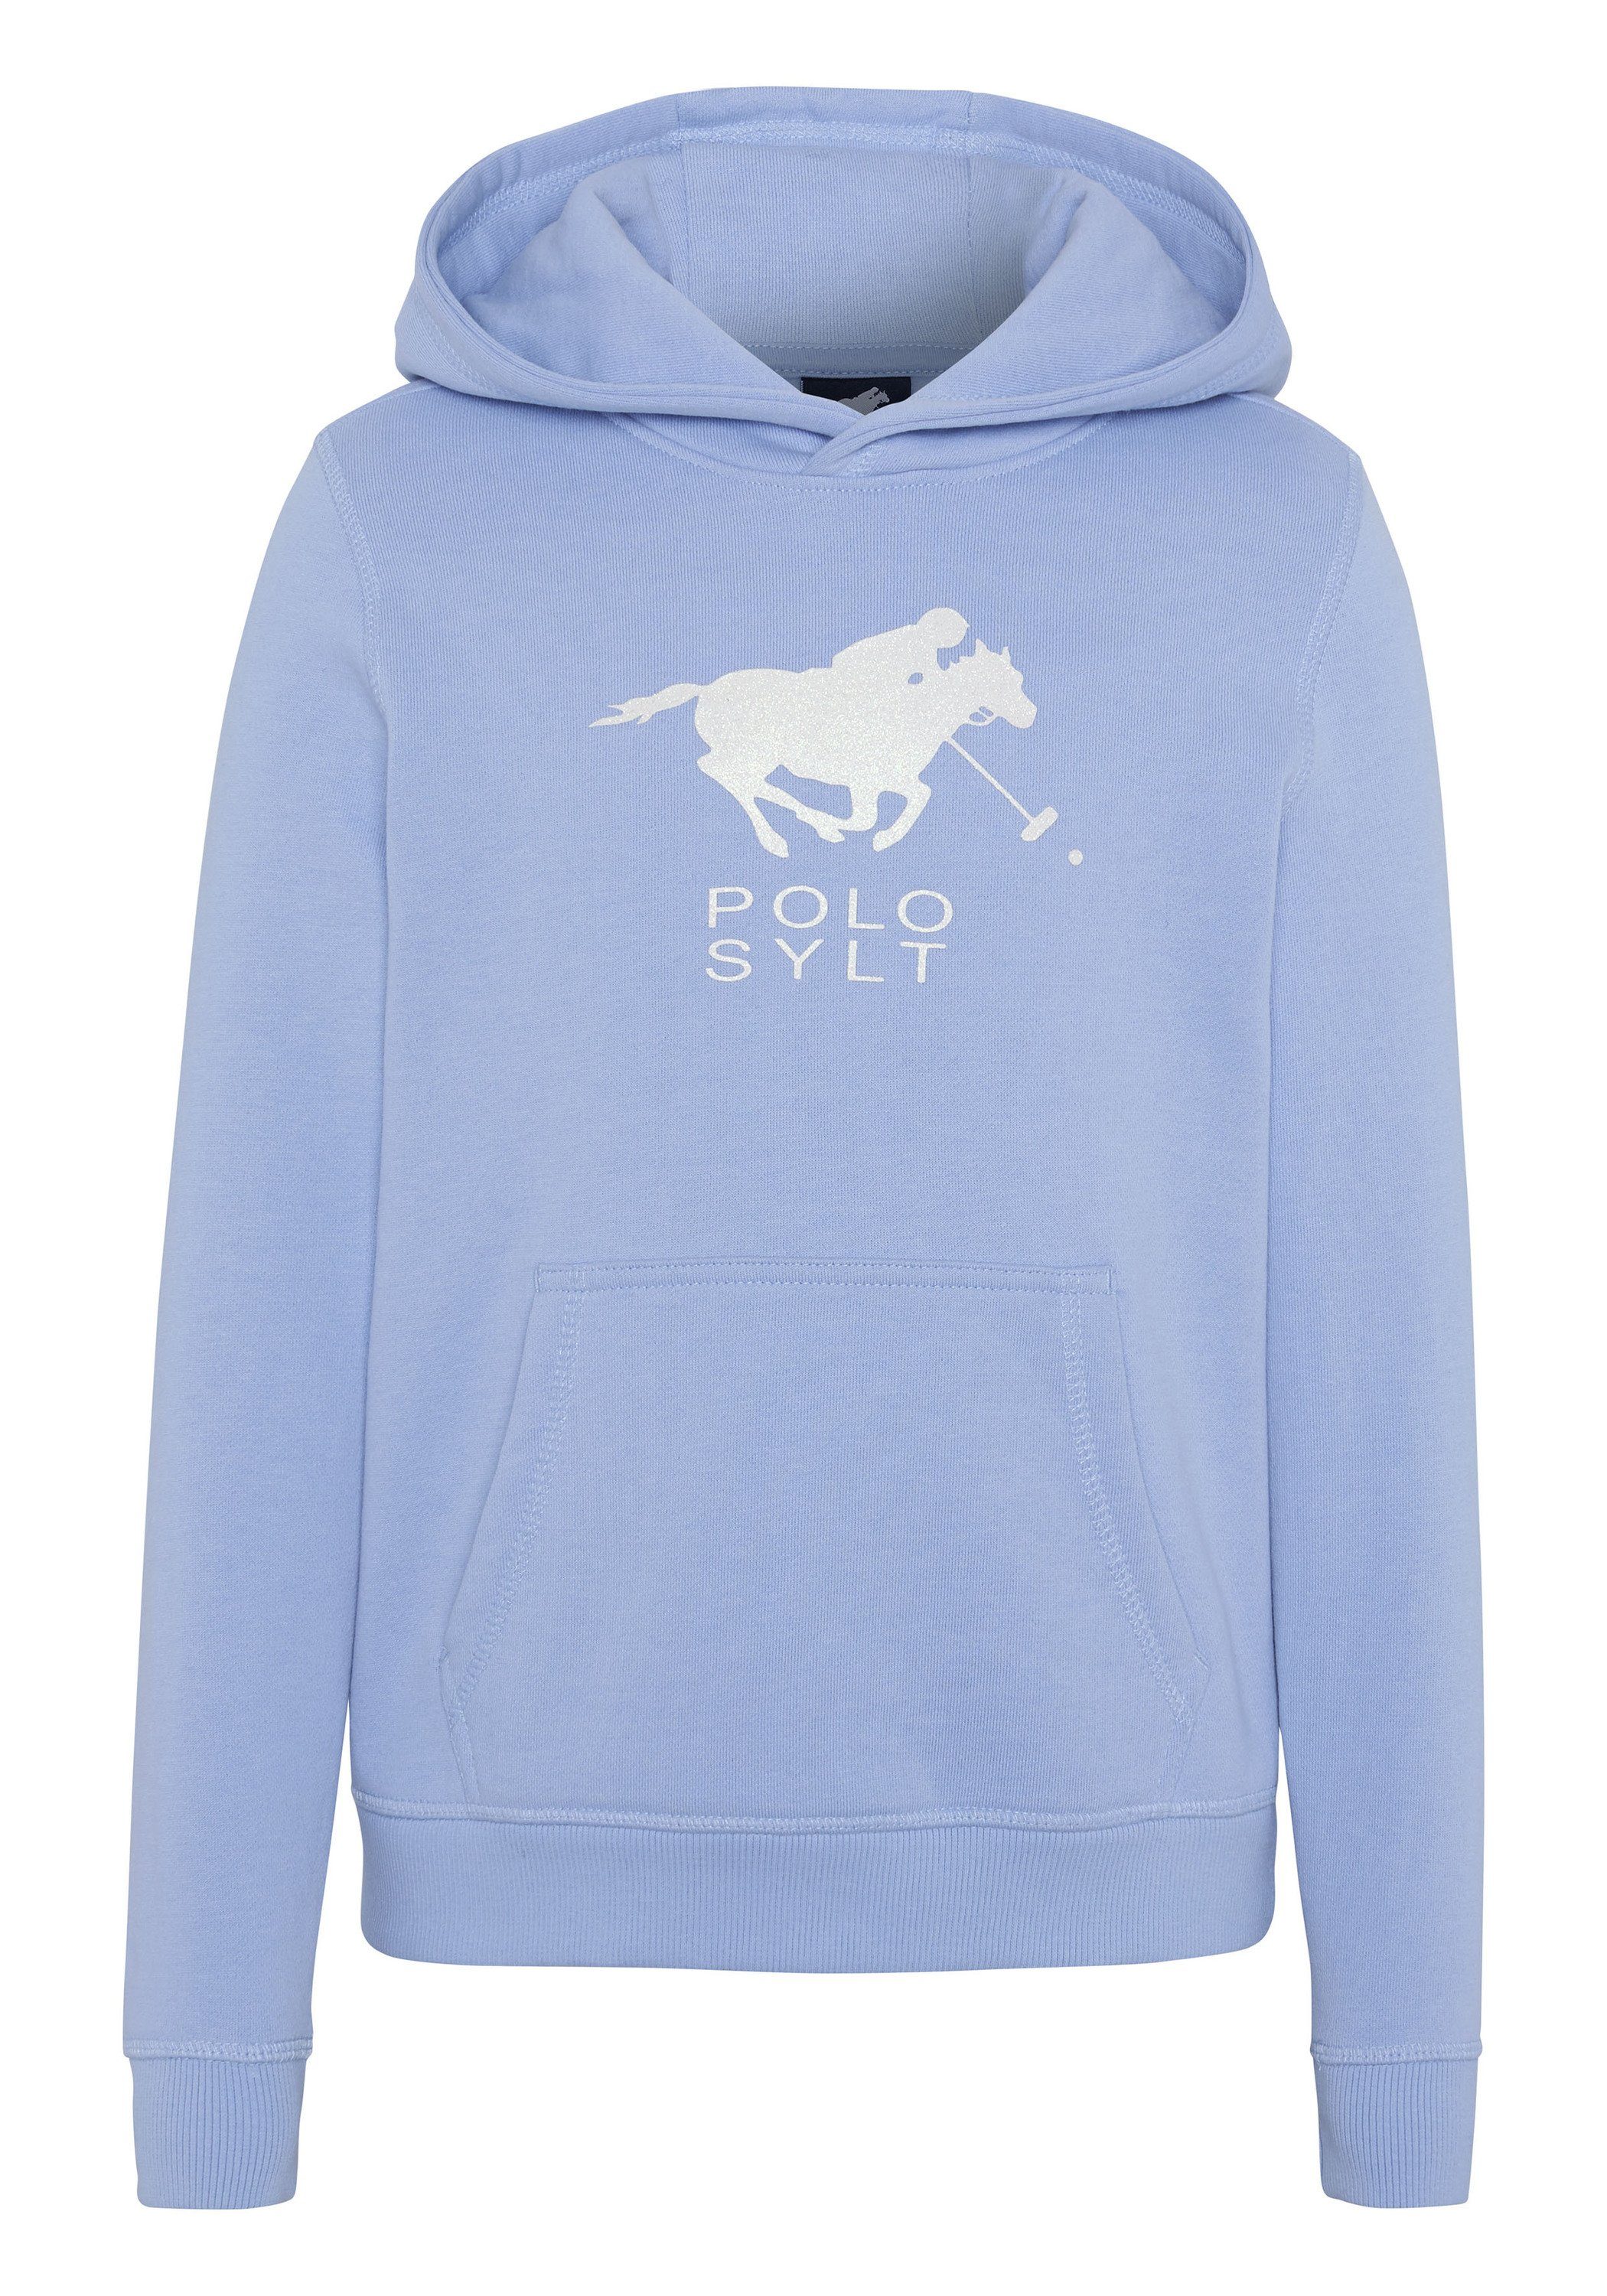 Polo Sylt Sweatshirt mit glitzerndem Label-Motiv Brunnera Blue